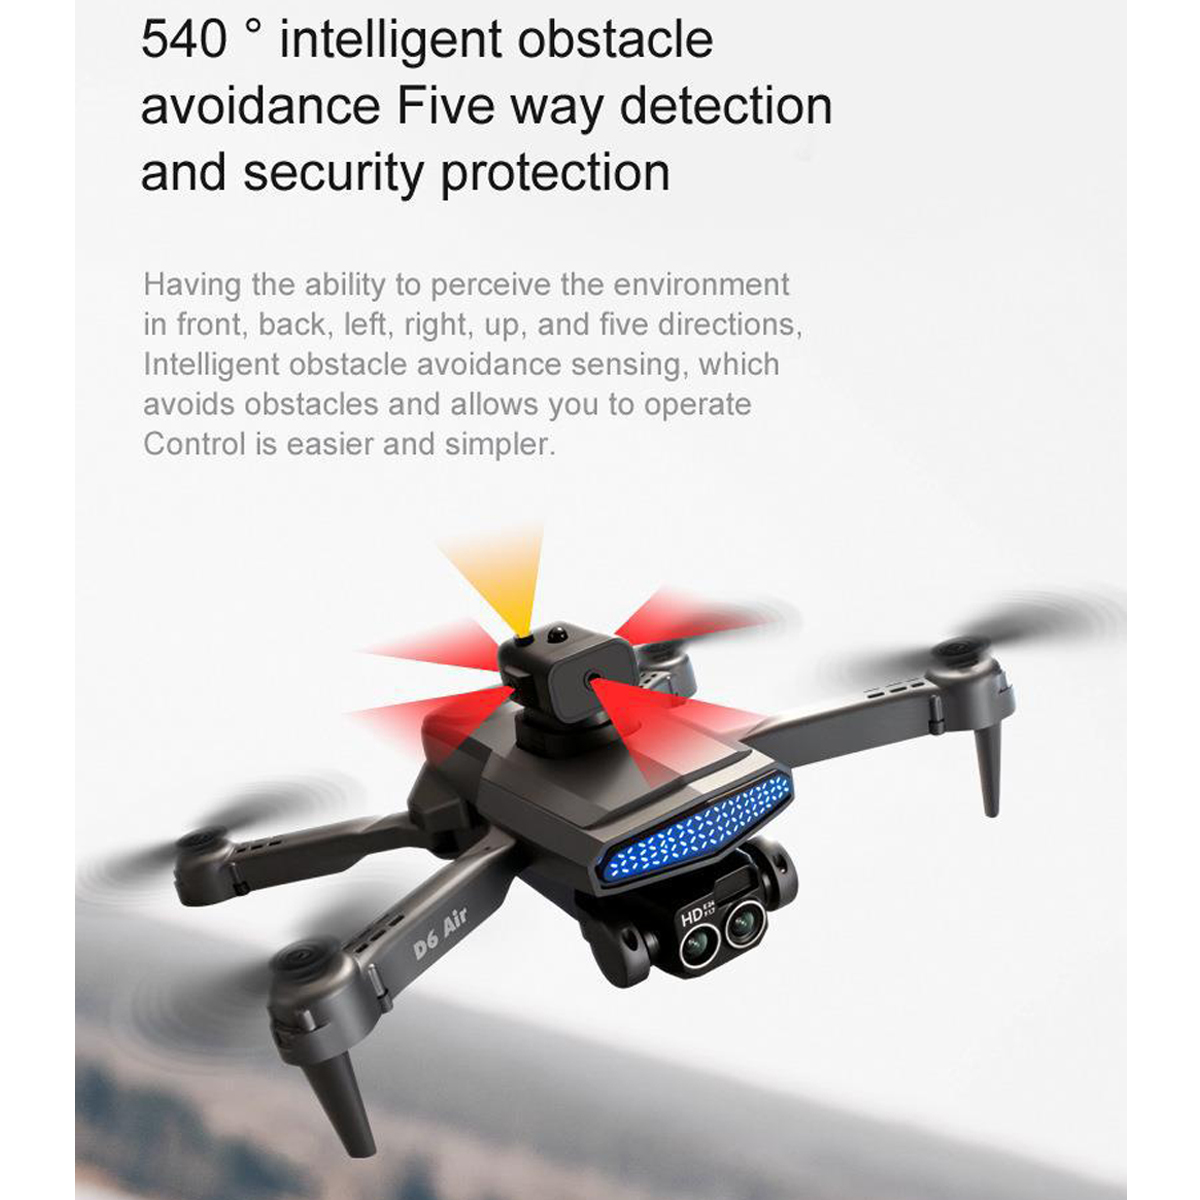 HD-Luftbildaufnahmen ESC Fluss BYTELIKE Drohne grau RC-Flugzeug optischer Hindernisvermeidung Drohne,